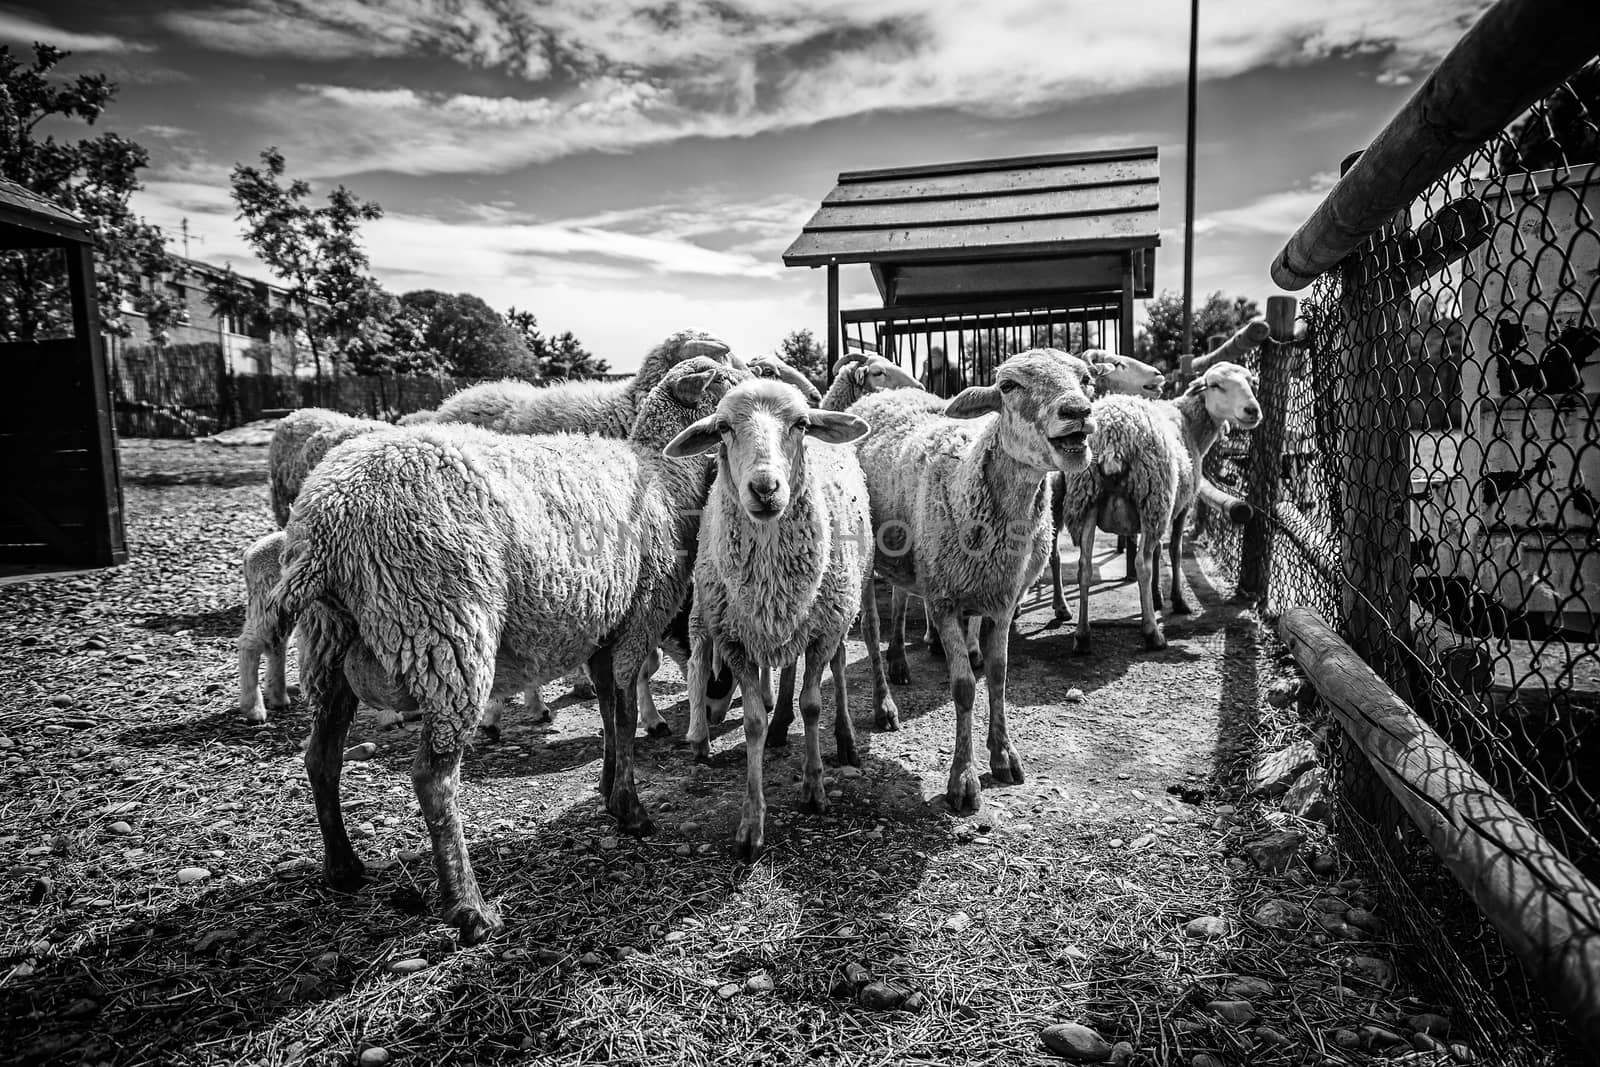 Sheep on a farm, detail of mammalian animals, wool and milk, food production